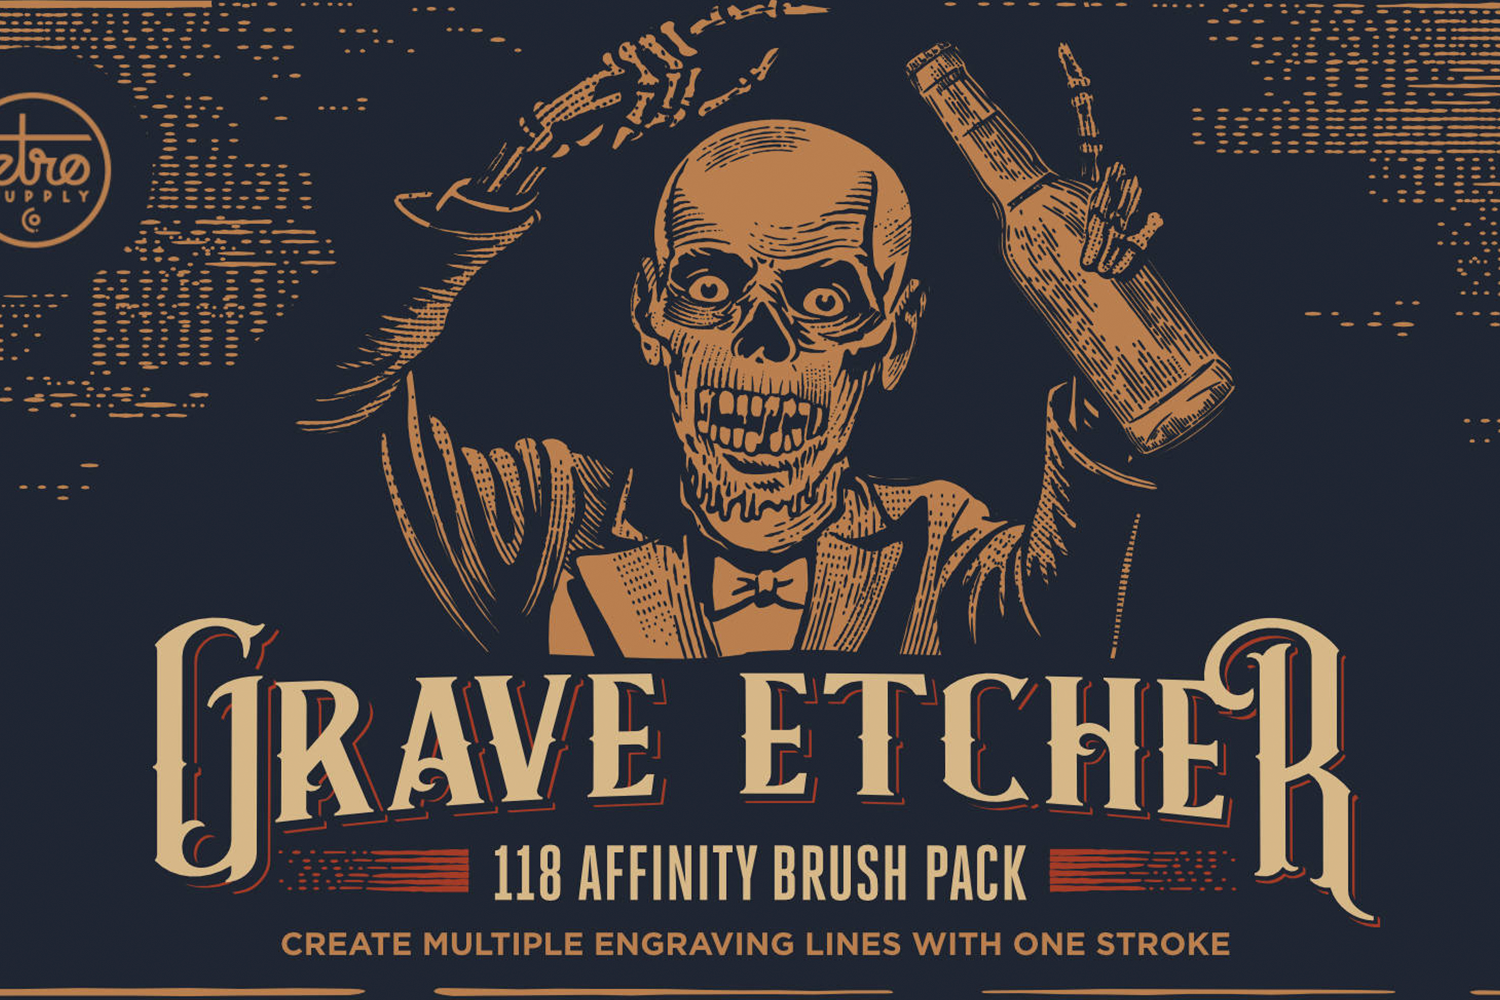 2094 Affinity雕刻风格的复古插图画笔笔刷素材包Grave Etcher Brush Pack